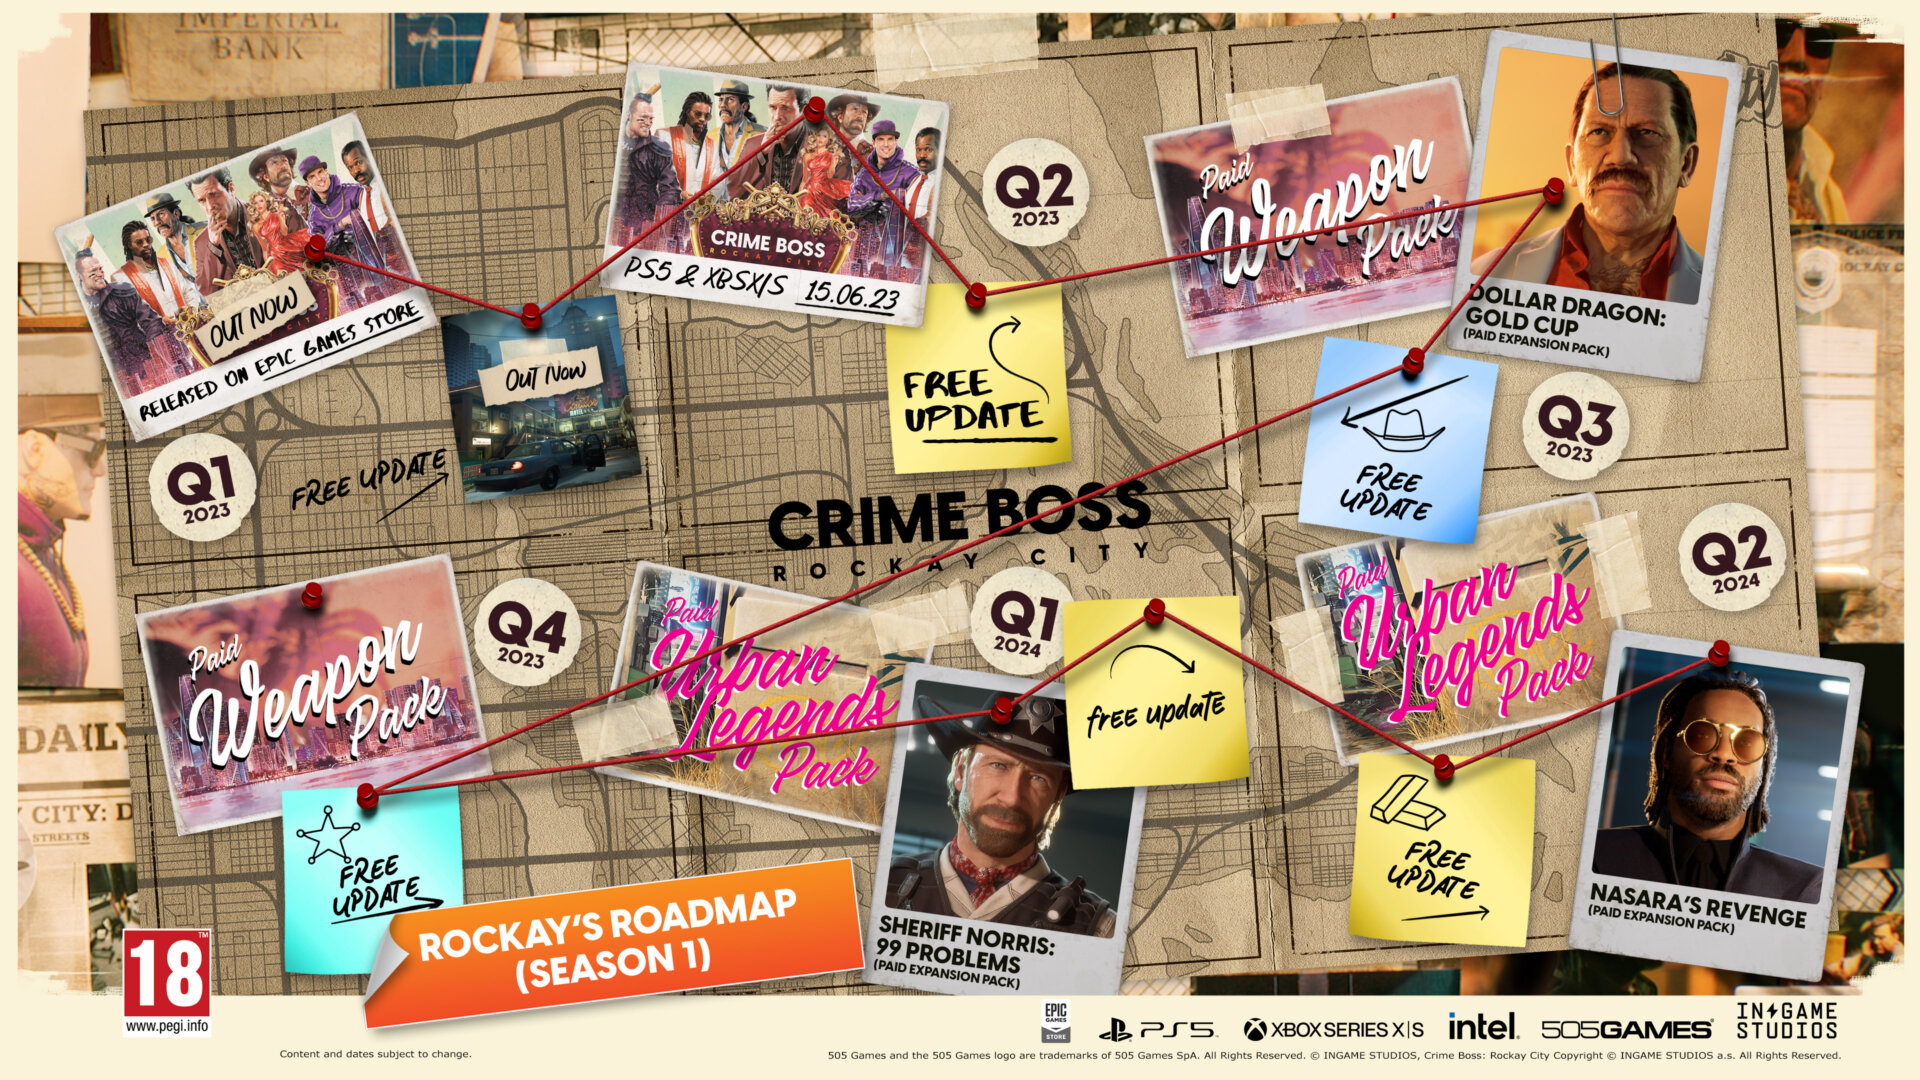 Crime Boss: Rockay City 